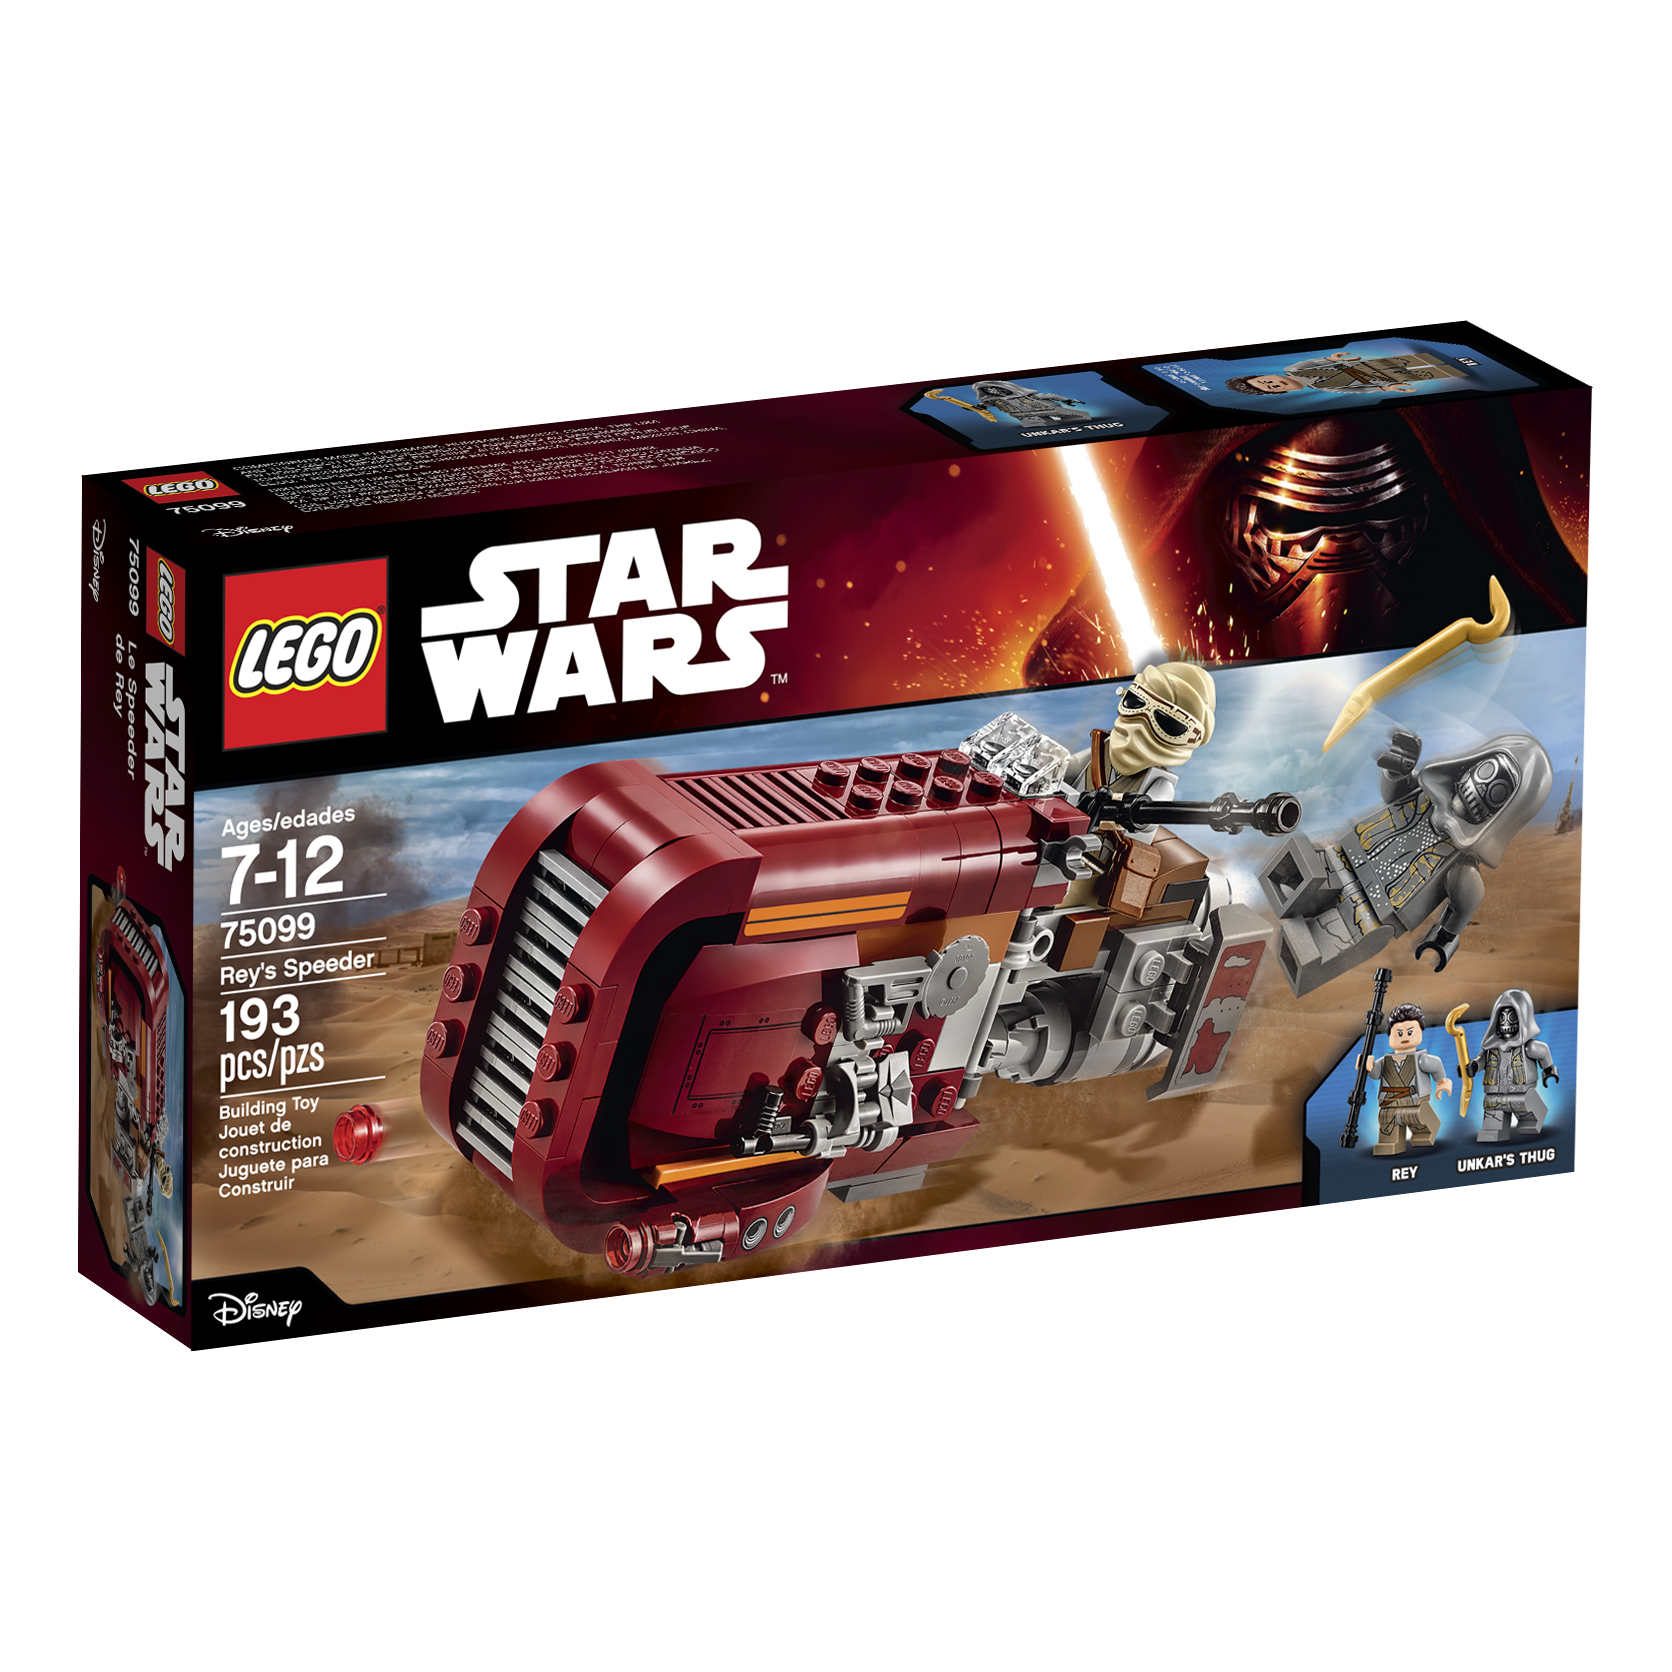 Star Wars Figures 3 Lego Unkar's Thugs Minifig Lot 75184 75099 